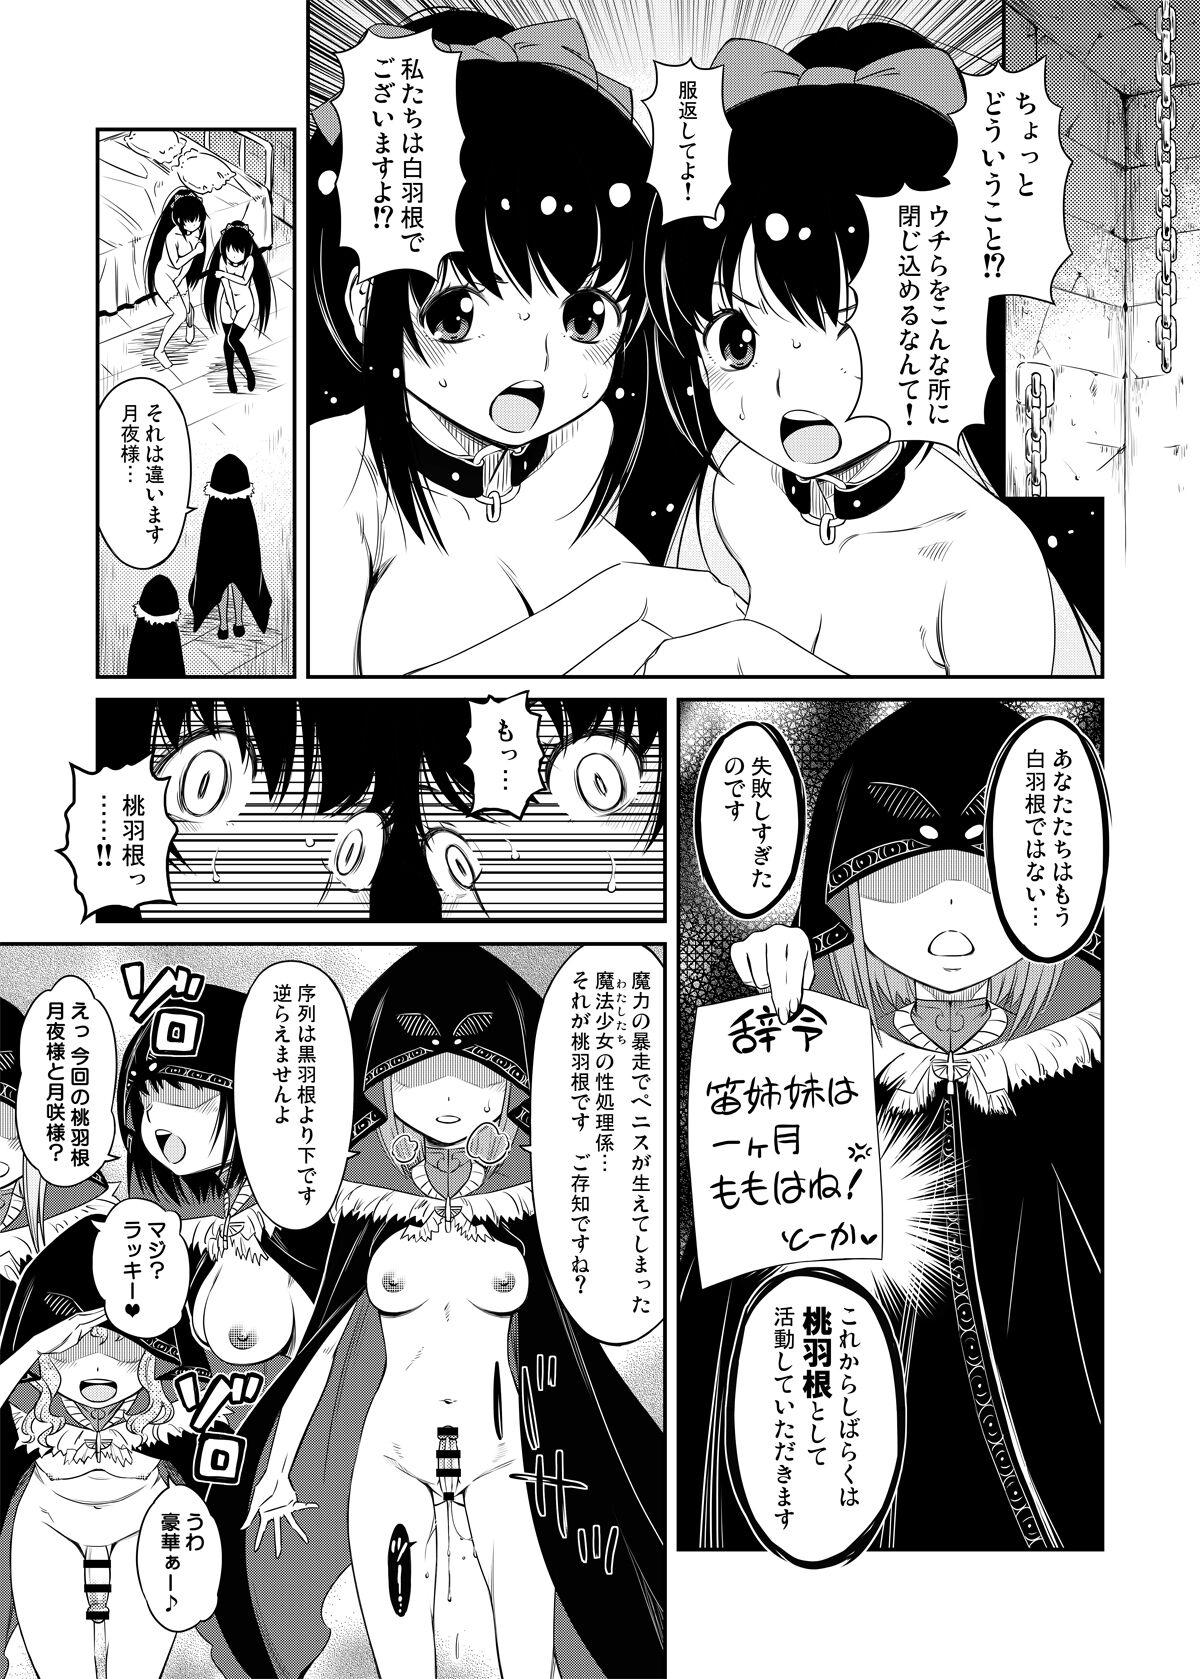 The Amane sisters' Erotic Manga 0